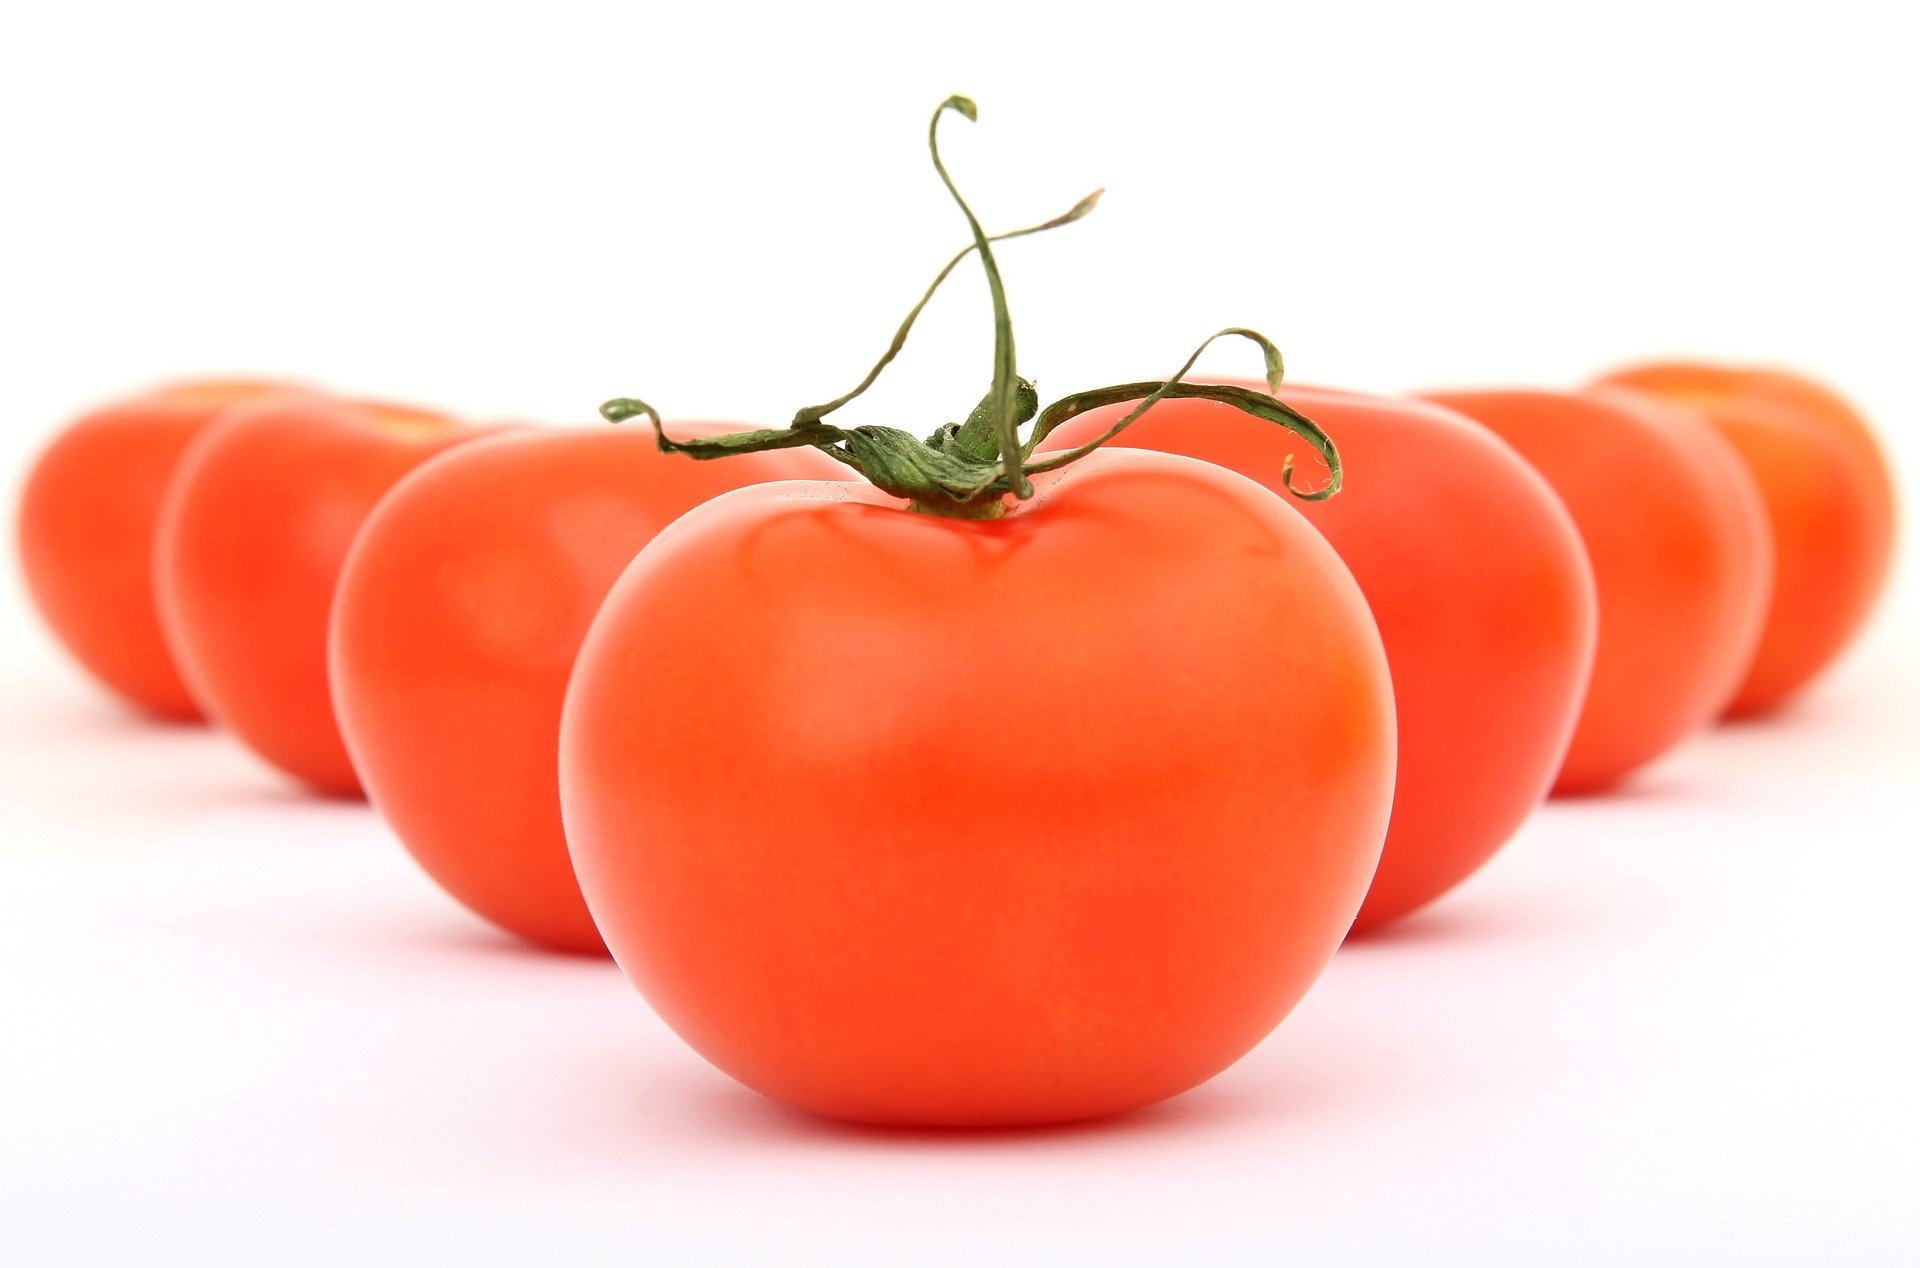 tomatoes-1239177_1920.jpg